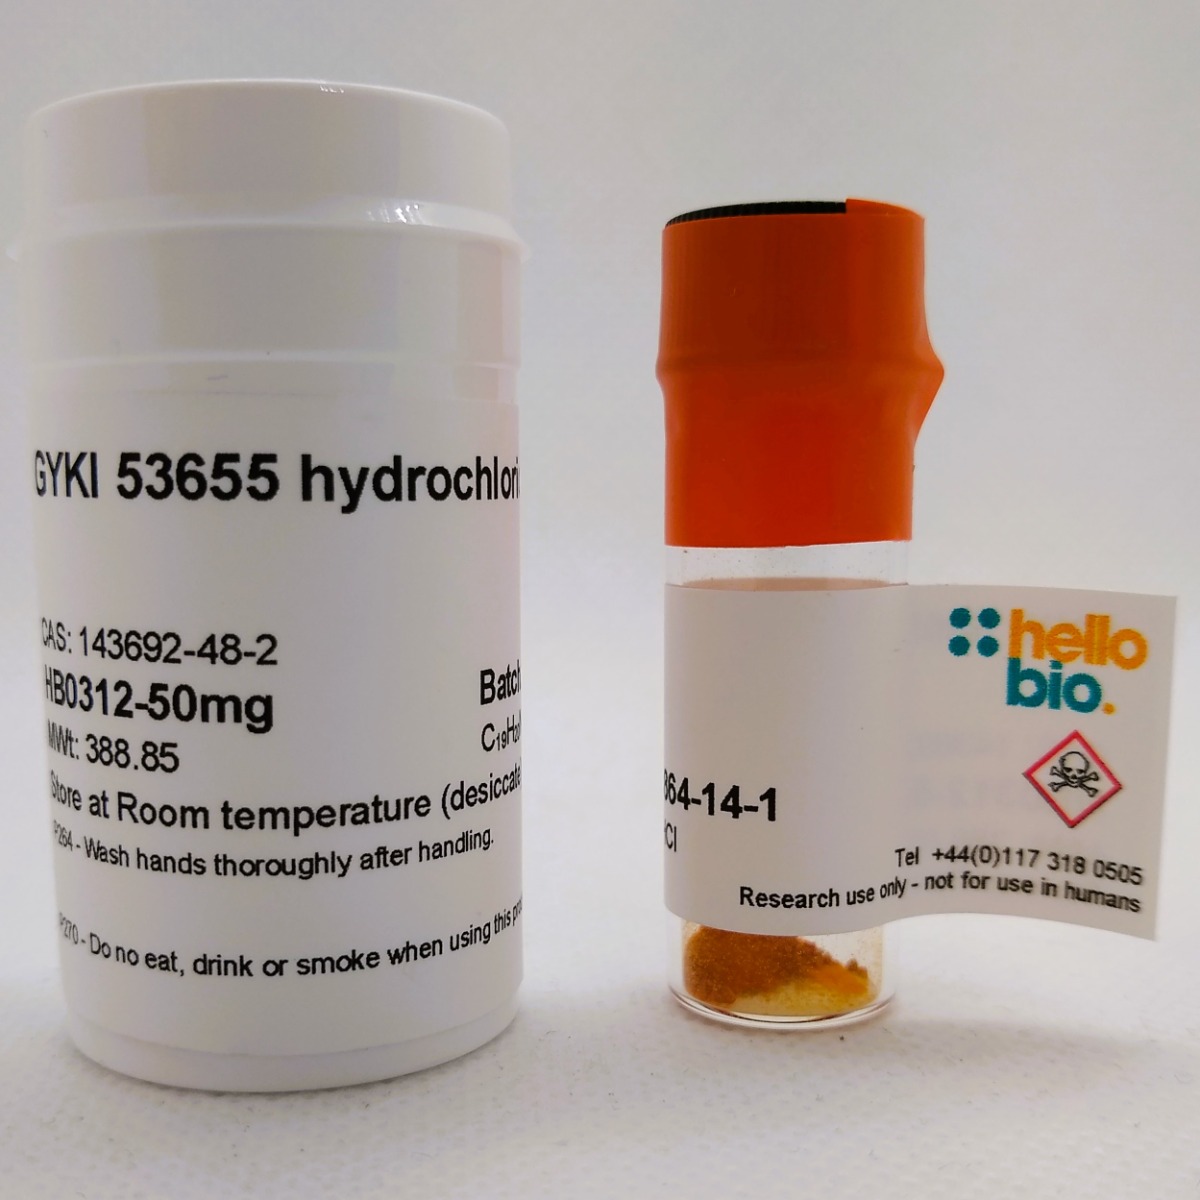 GYKI 53655 hydrochloride product vial image | Hello Bio